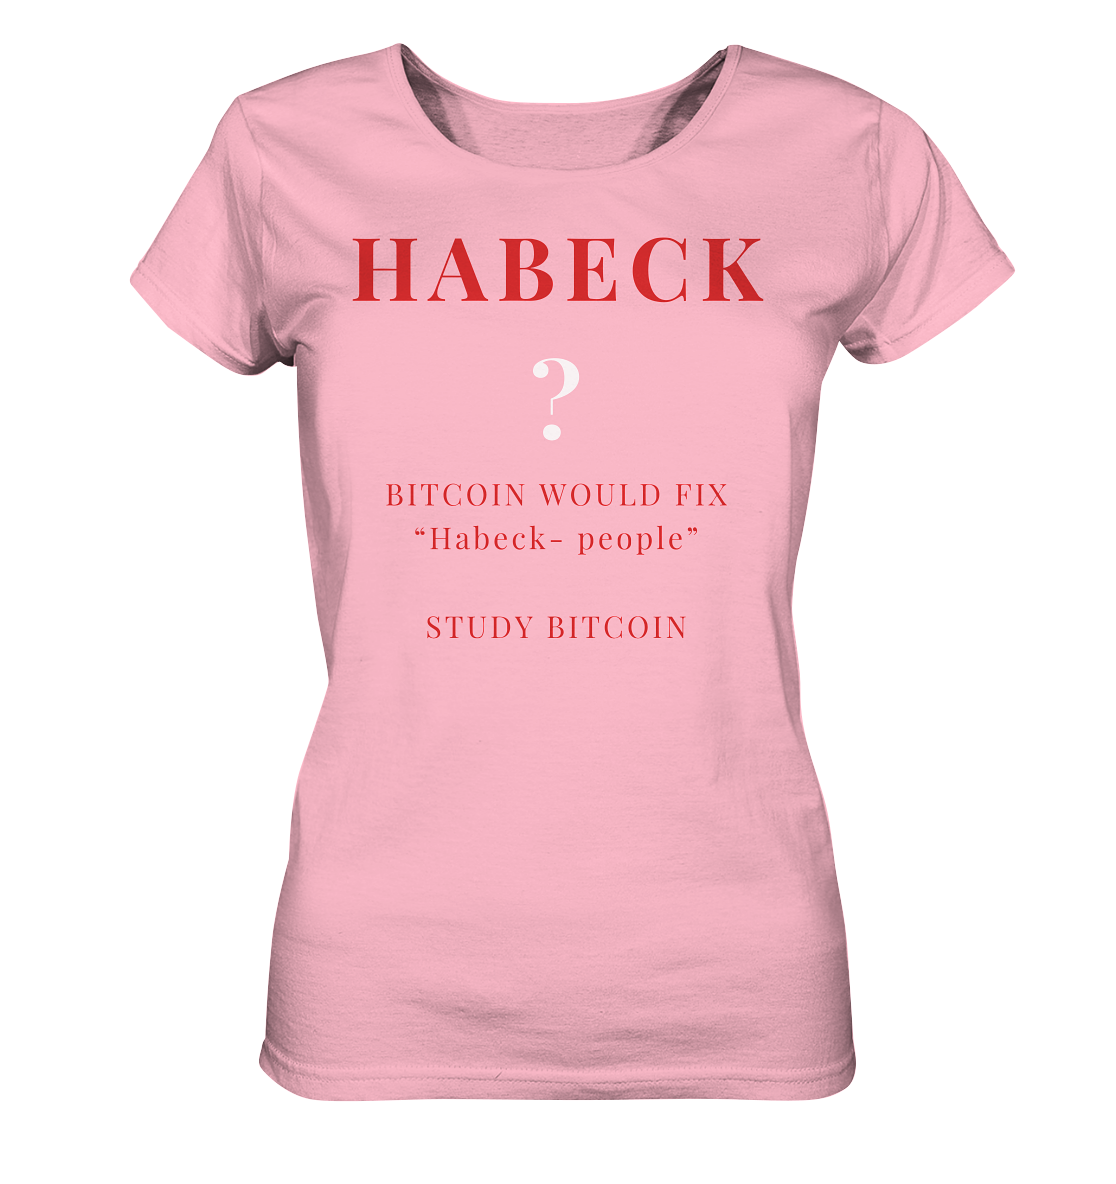 HABECK ? BITCOIN WOULD FIX "Habeck people" STUDY BITCOIN - (Ladies Collection 21% Rabatt bis zum Halving 2024) Kopie - Ladies Organic Basic Shirt